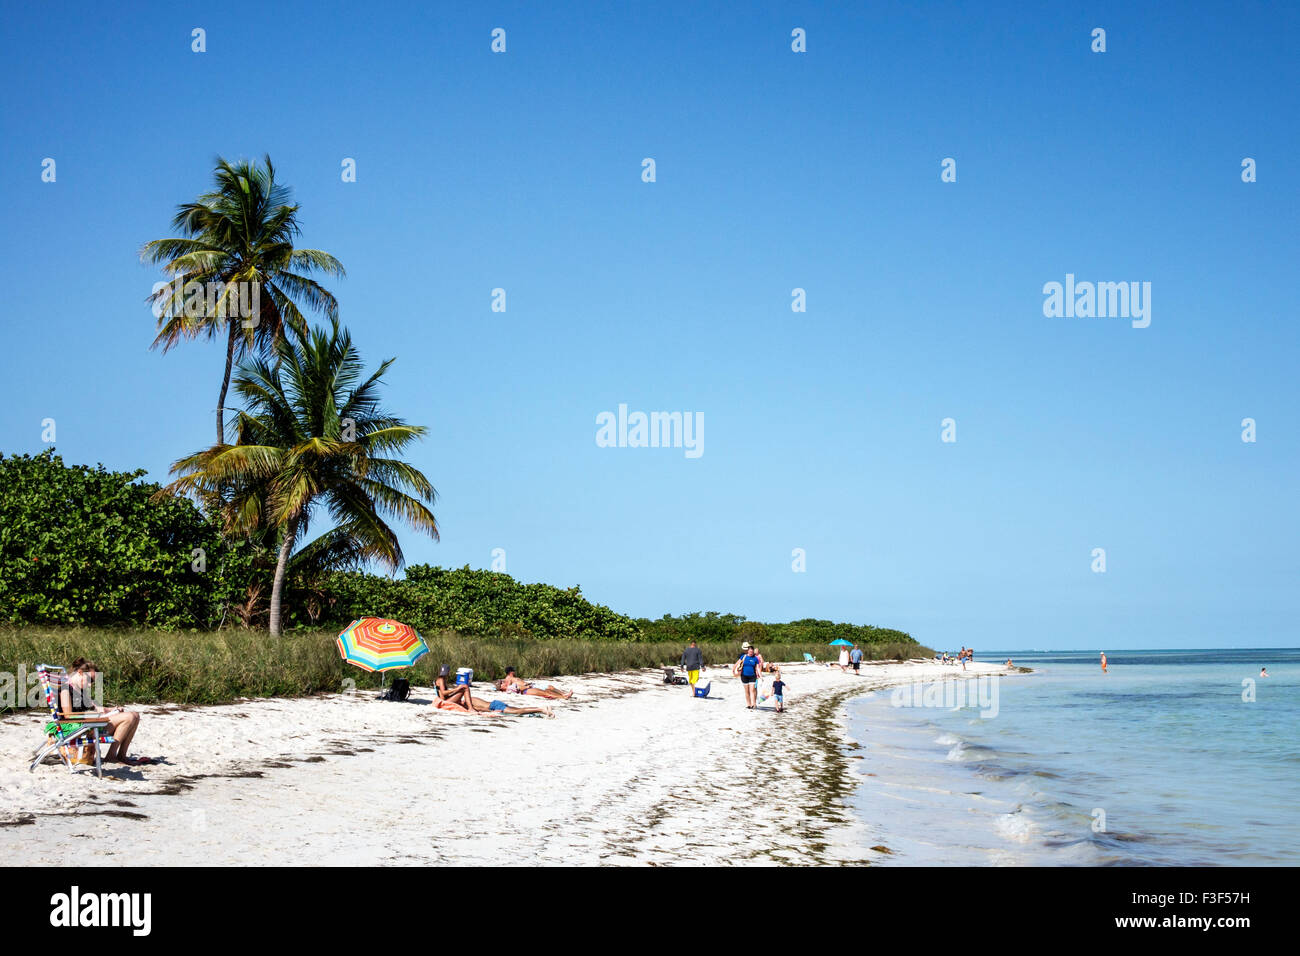 Florida Keys,Big Pine Key,Bahia Honda State Park,Atlantic Ocean,beach,sunbathers,palm trees,FL150508047 Stock Photo